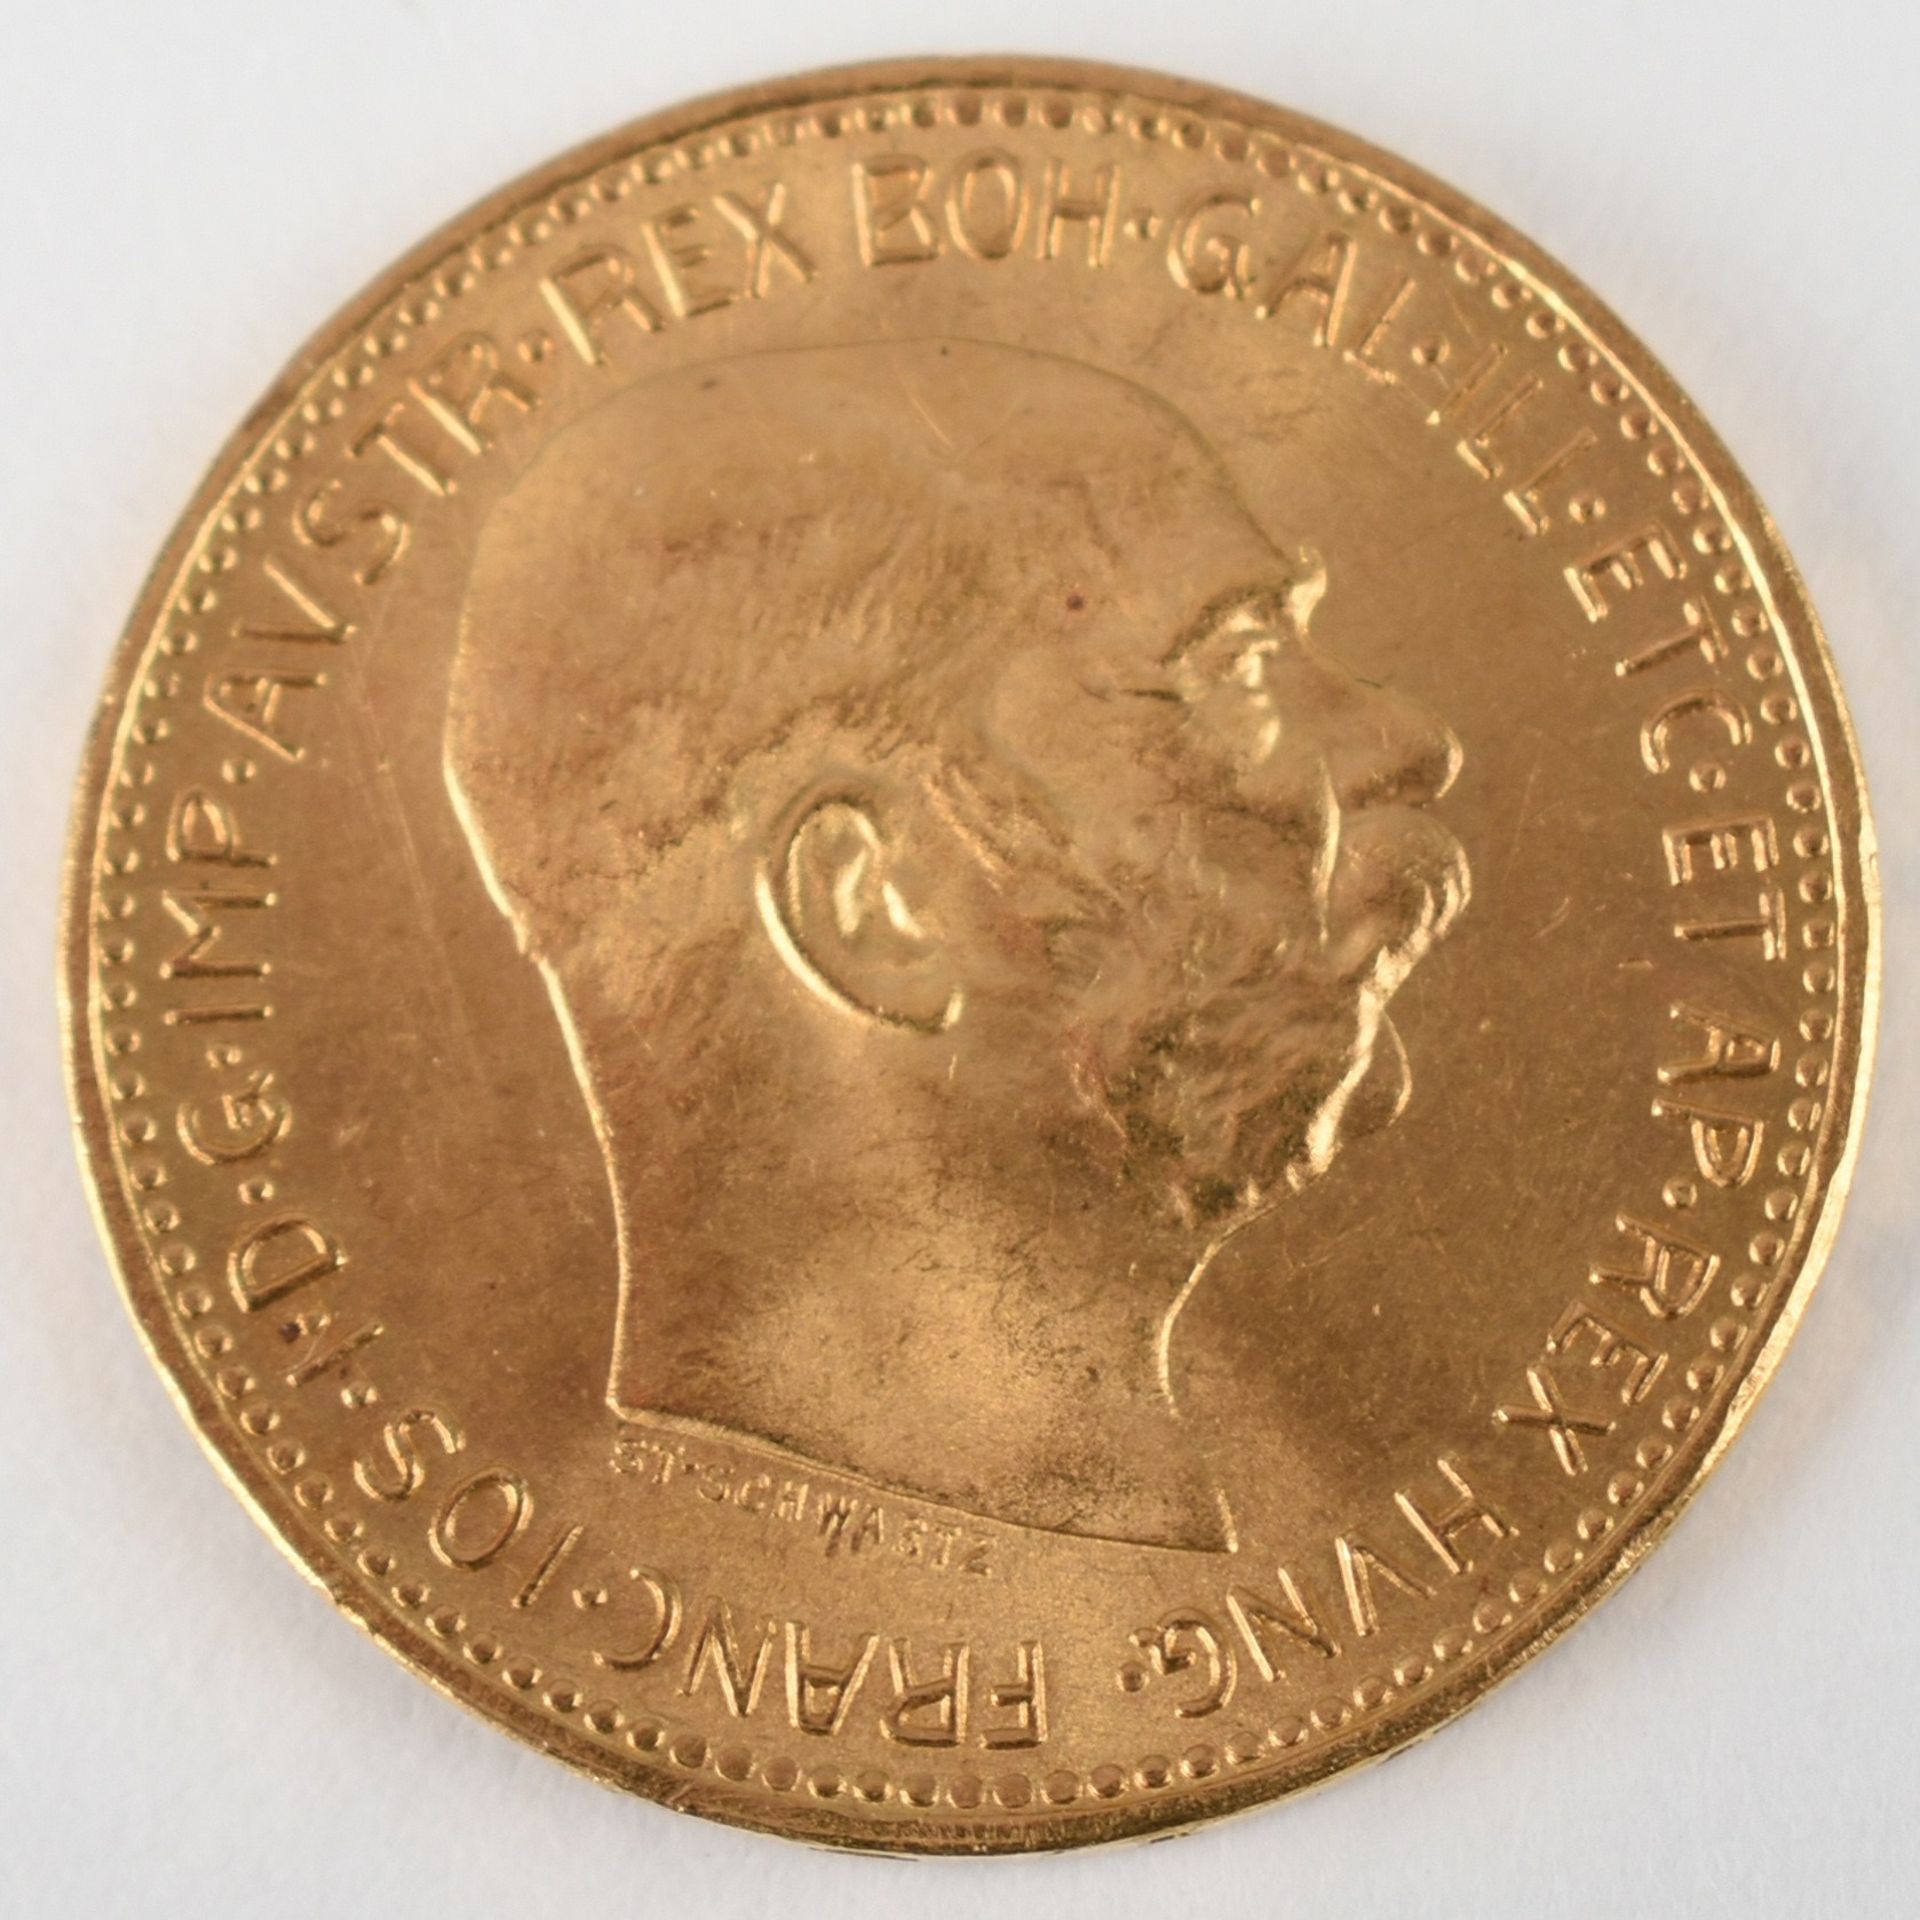 Goldmünze Österreich 1915 20 Kronen in Gold, 900/1000, 6,775 g, D ca. 21,1 mm, av. Kaiser Franz - Image 2 of 3